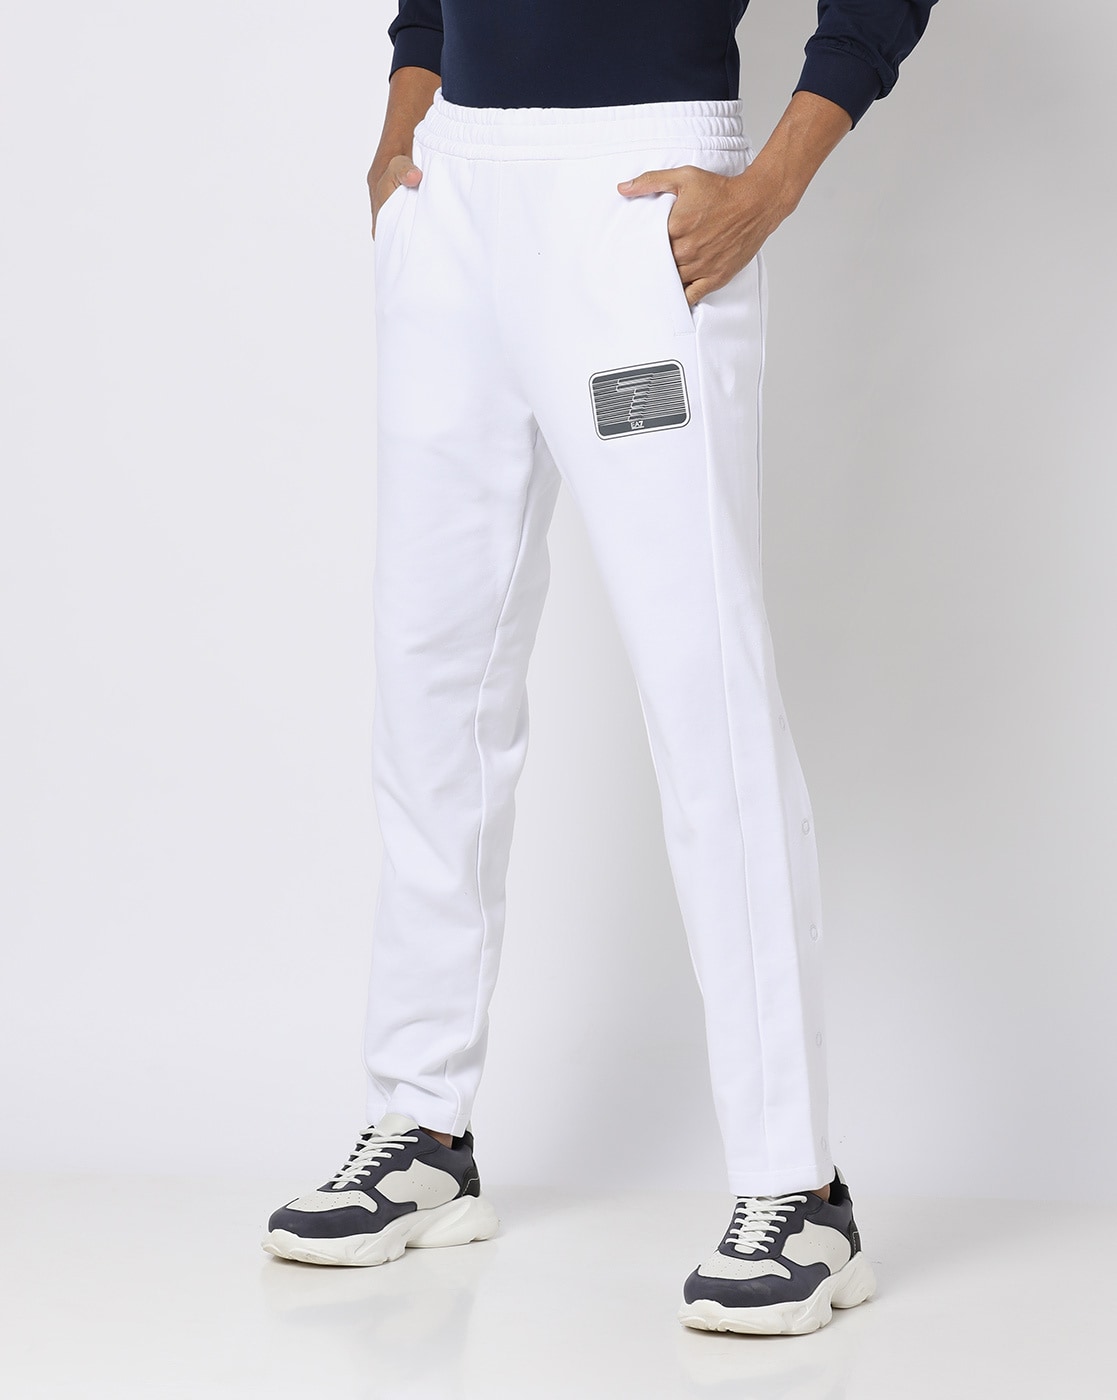 White Armani Pants on Sale - www.puzzlewood.net 1694856674